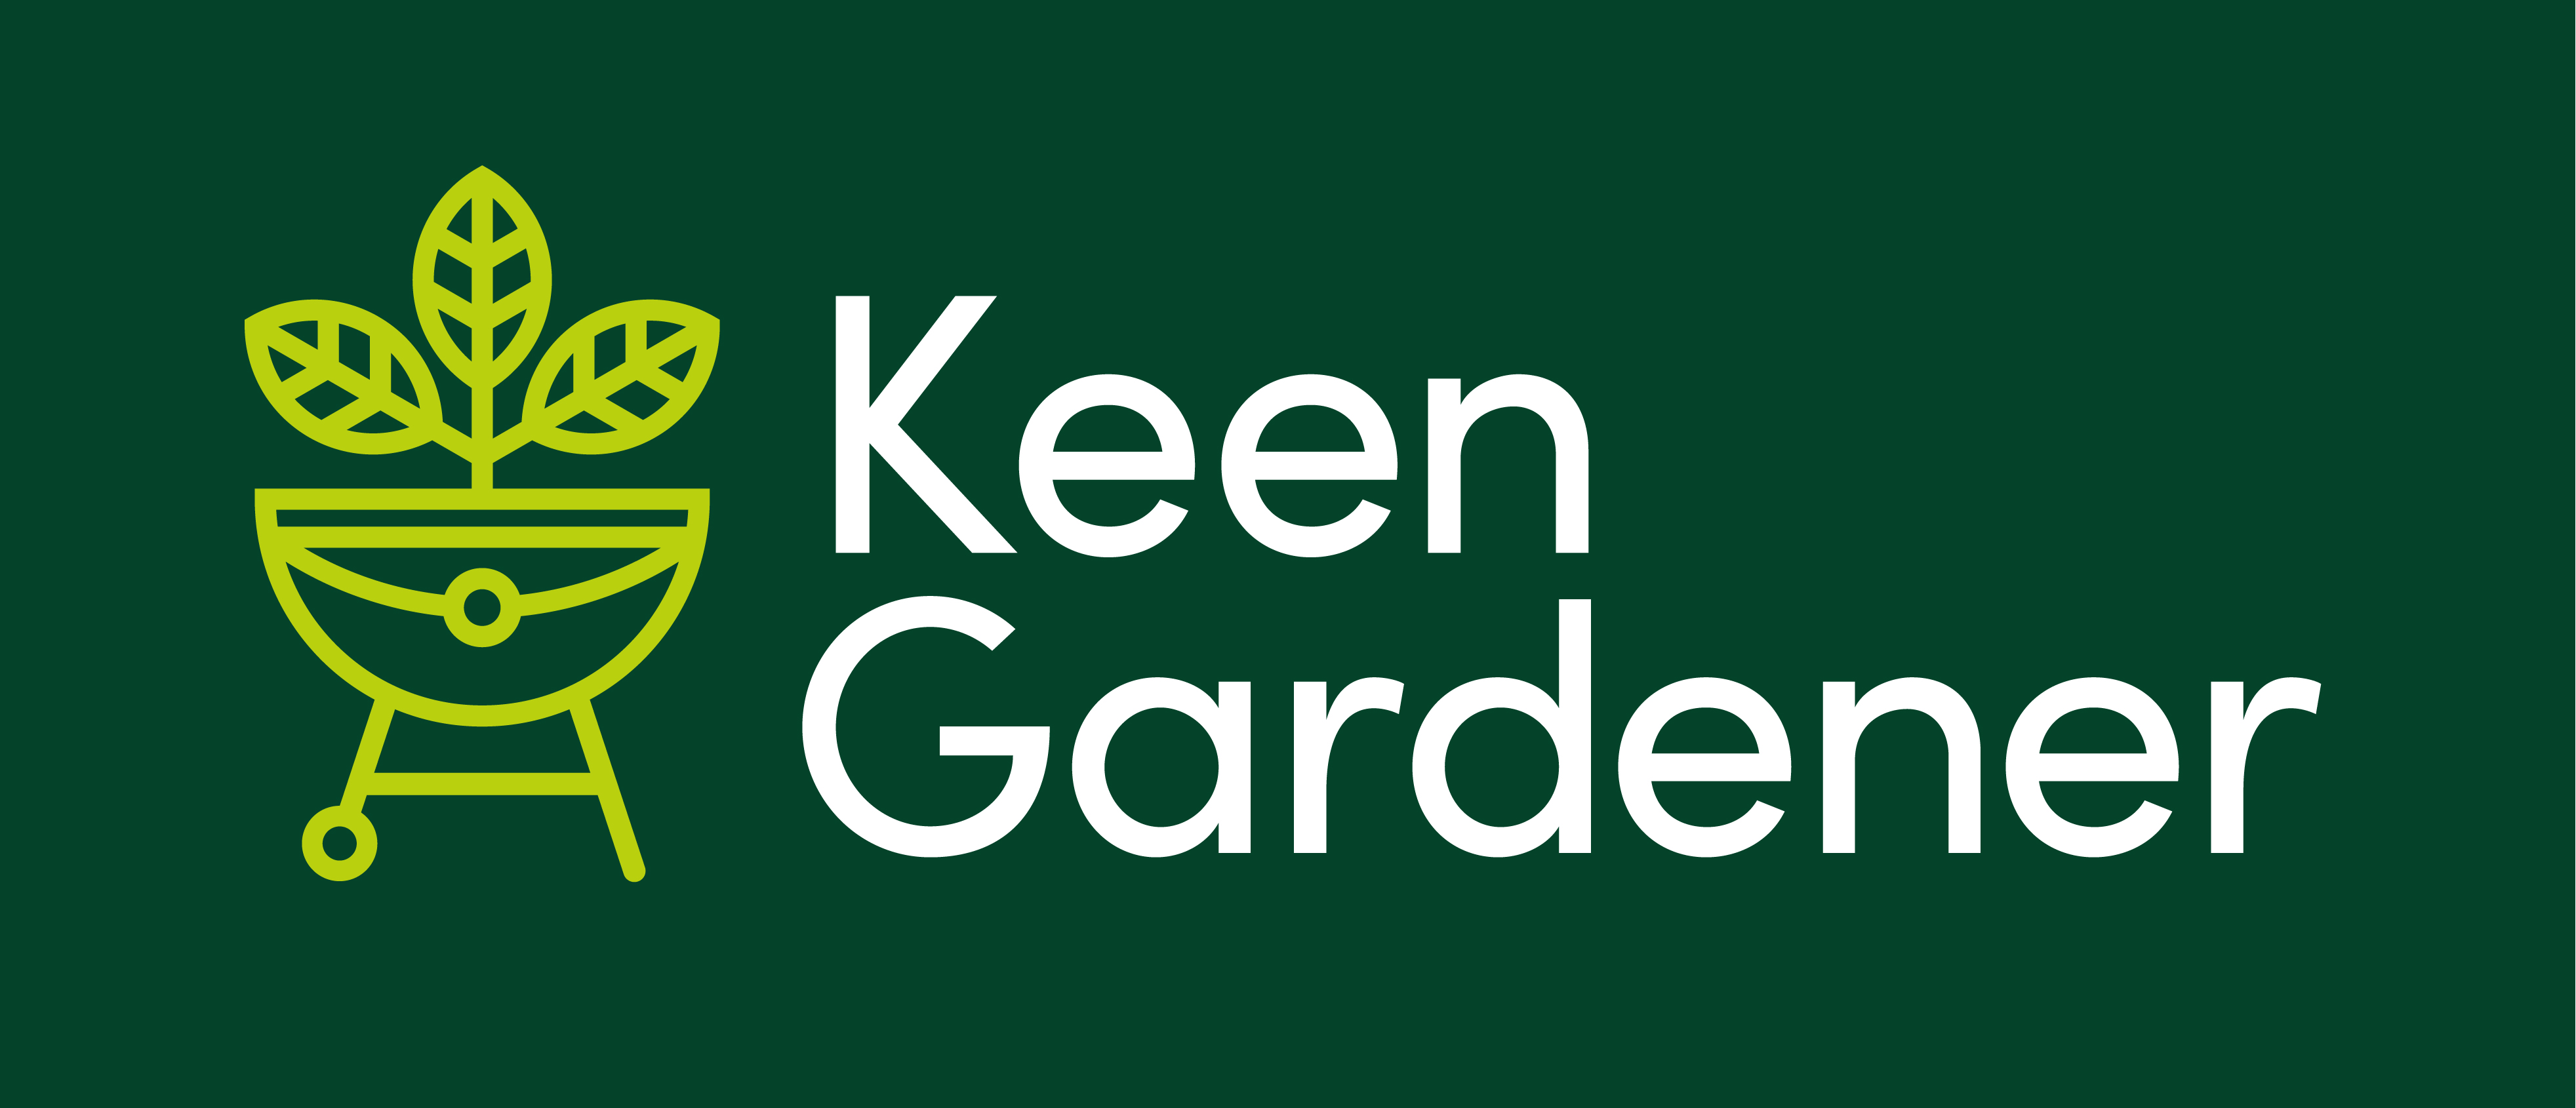 Pay by Paypal - Keen Gardener Online Garden Retailer of Barbecues, Garden Furniture & Garden Equipment